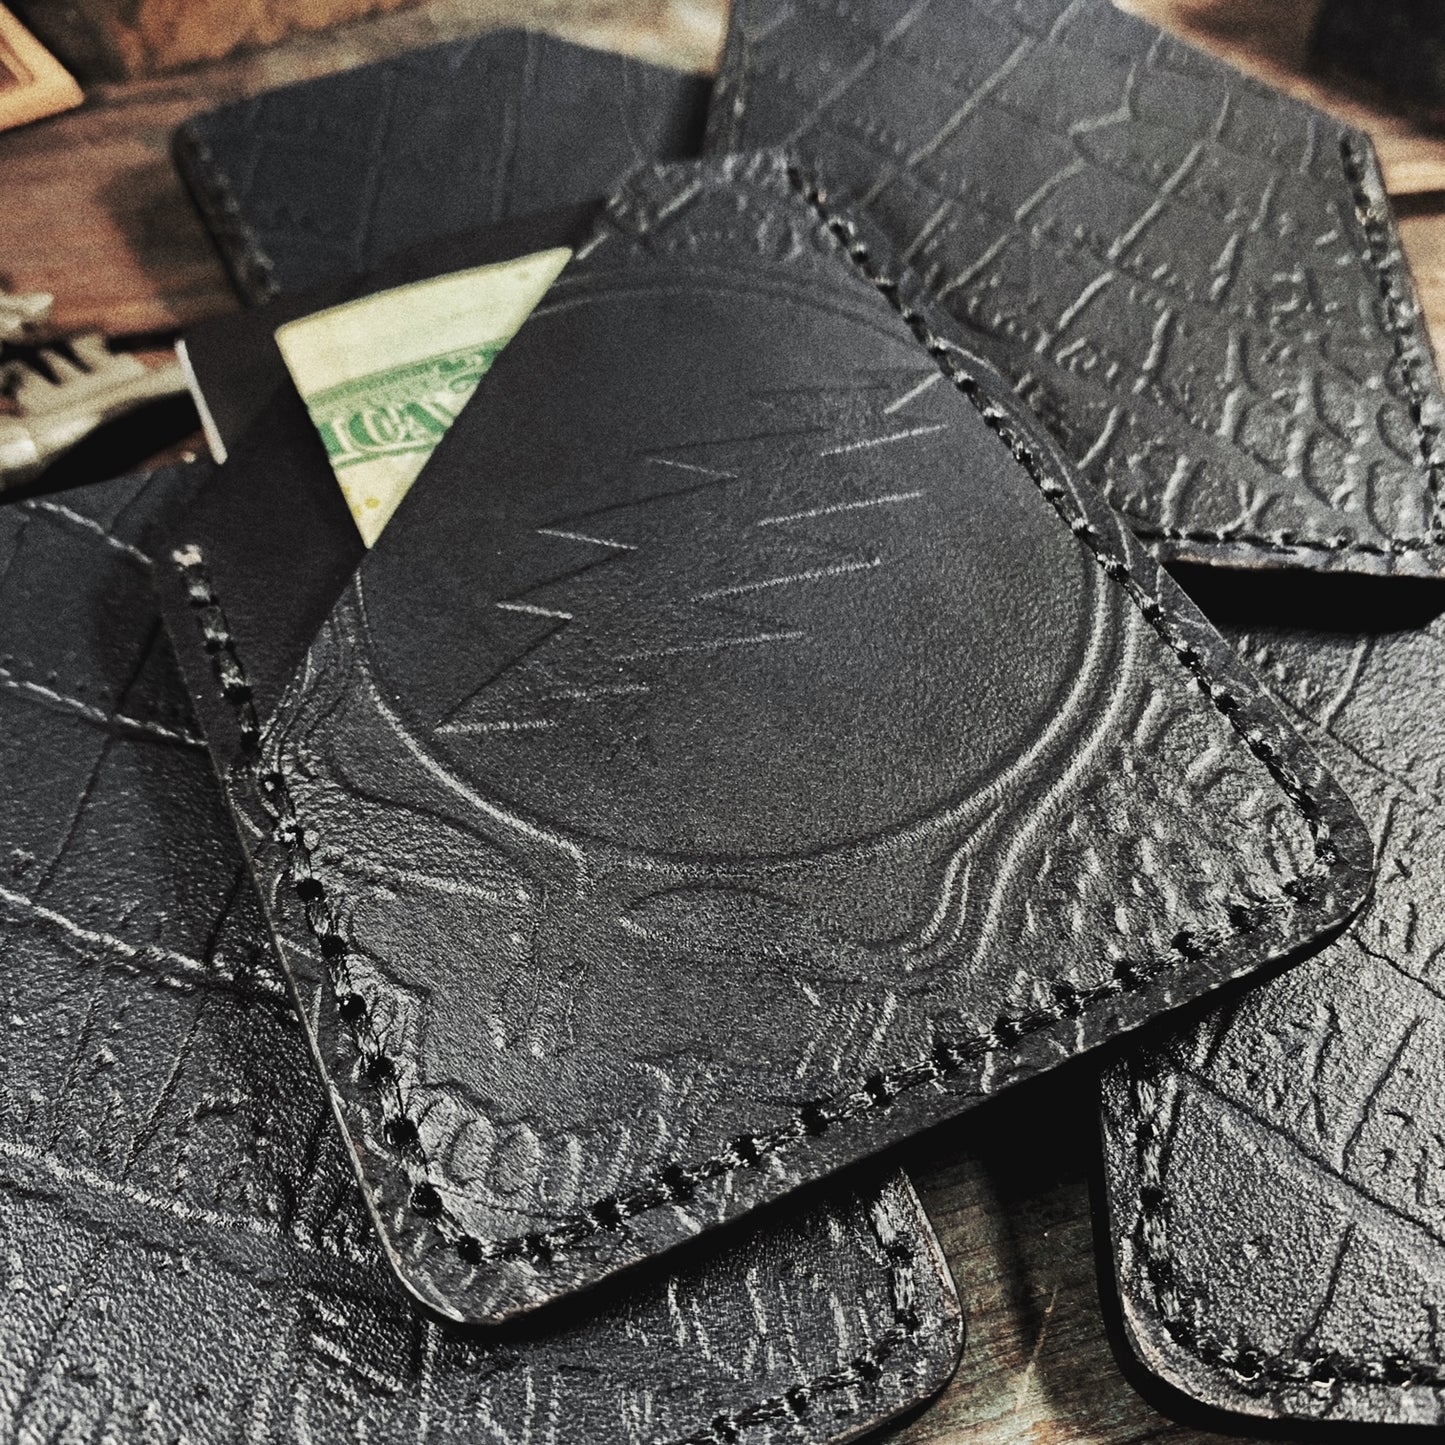 Grateful Dead Croco Stealie Embossed Hand Made Black Leather Minimalist Wallet